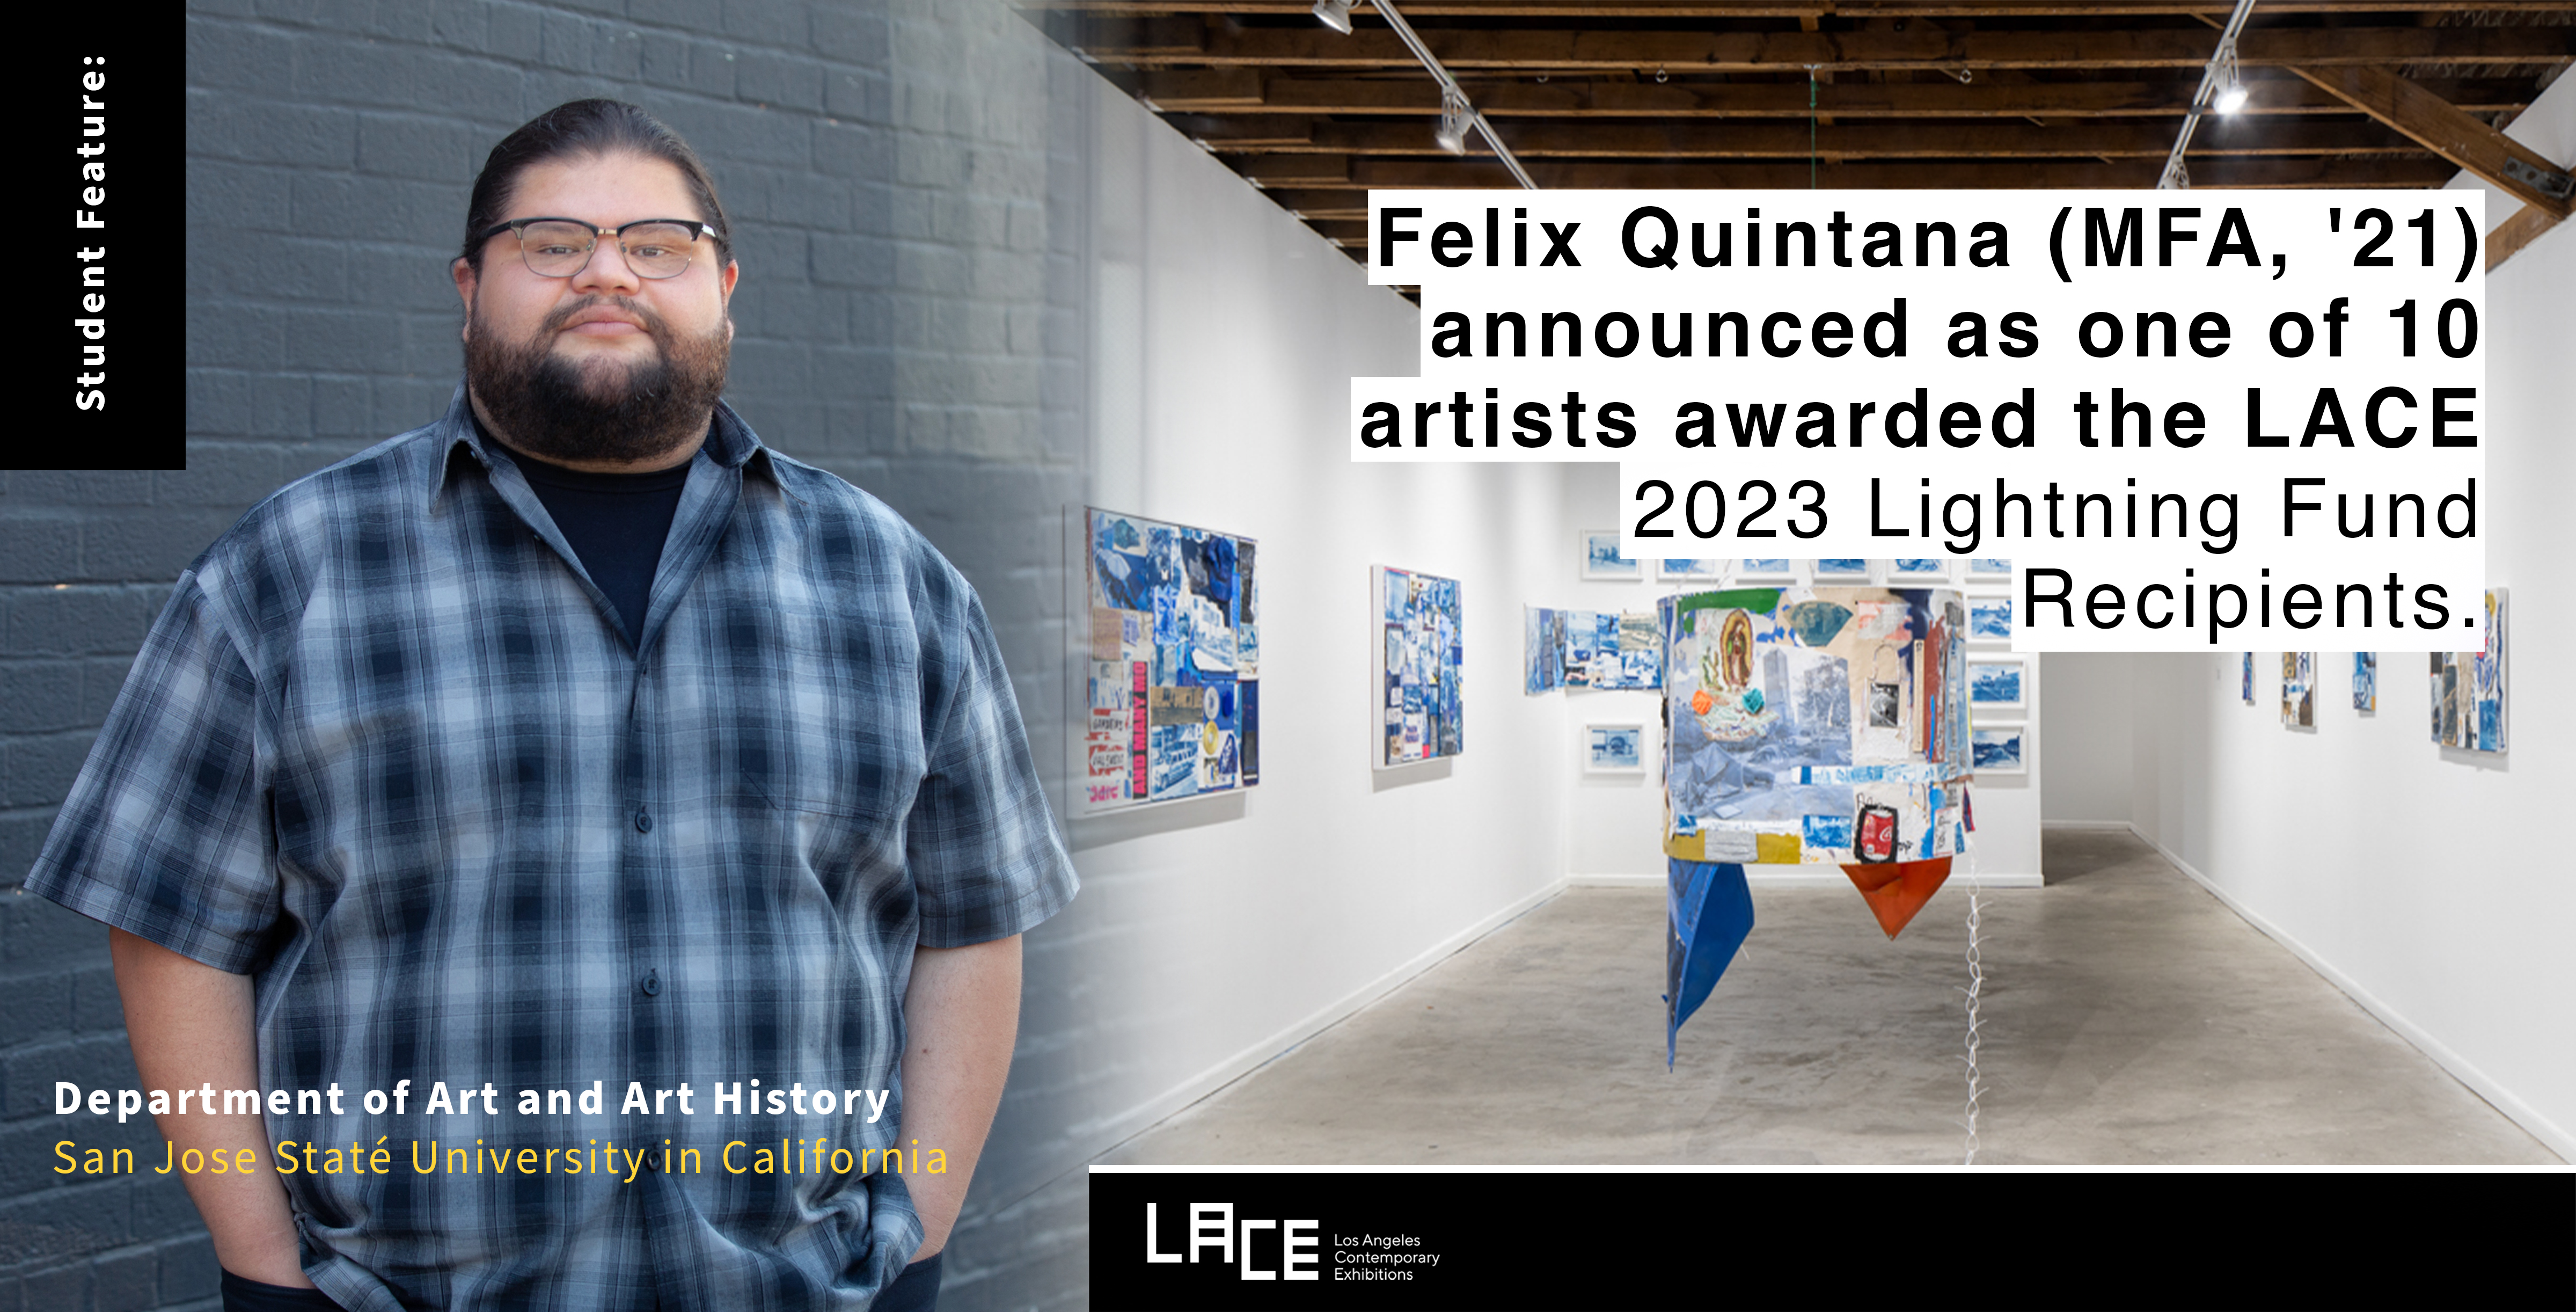 Descriptive Image – MFA student Felix Quintana awarded the LACE award for 2023.